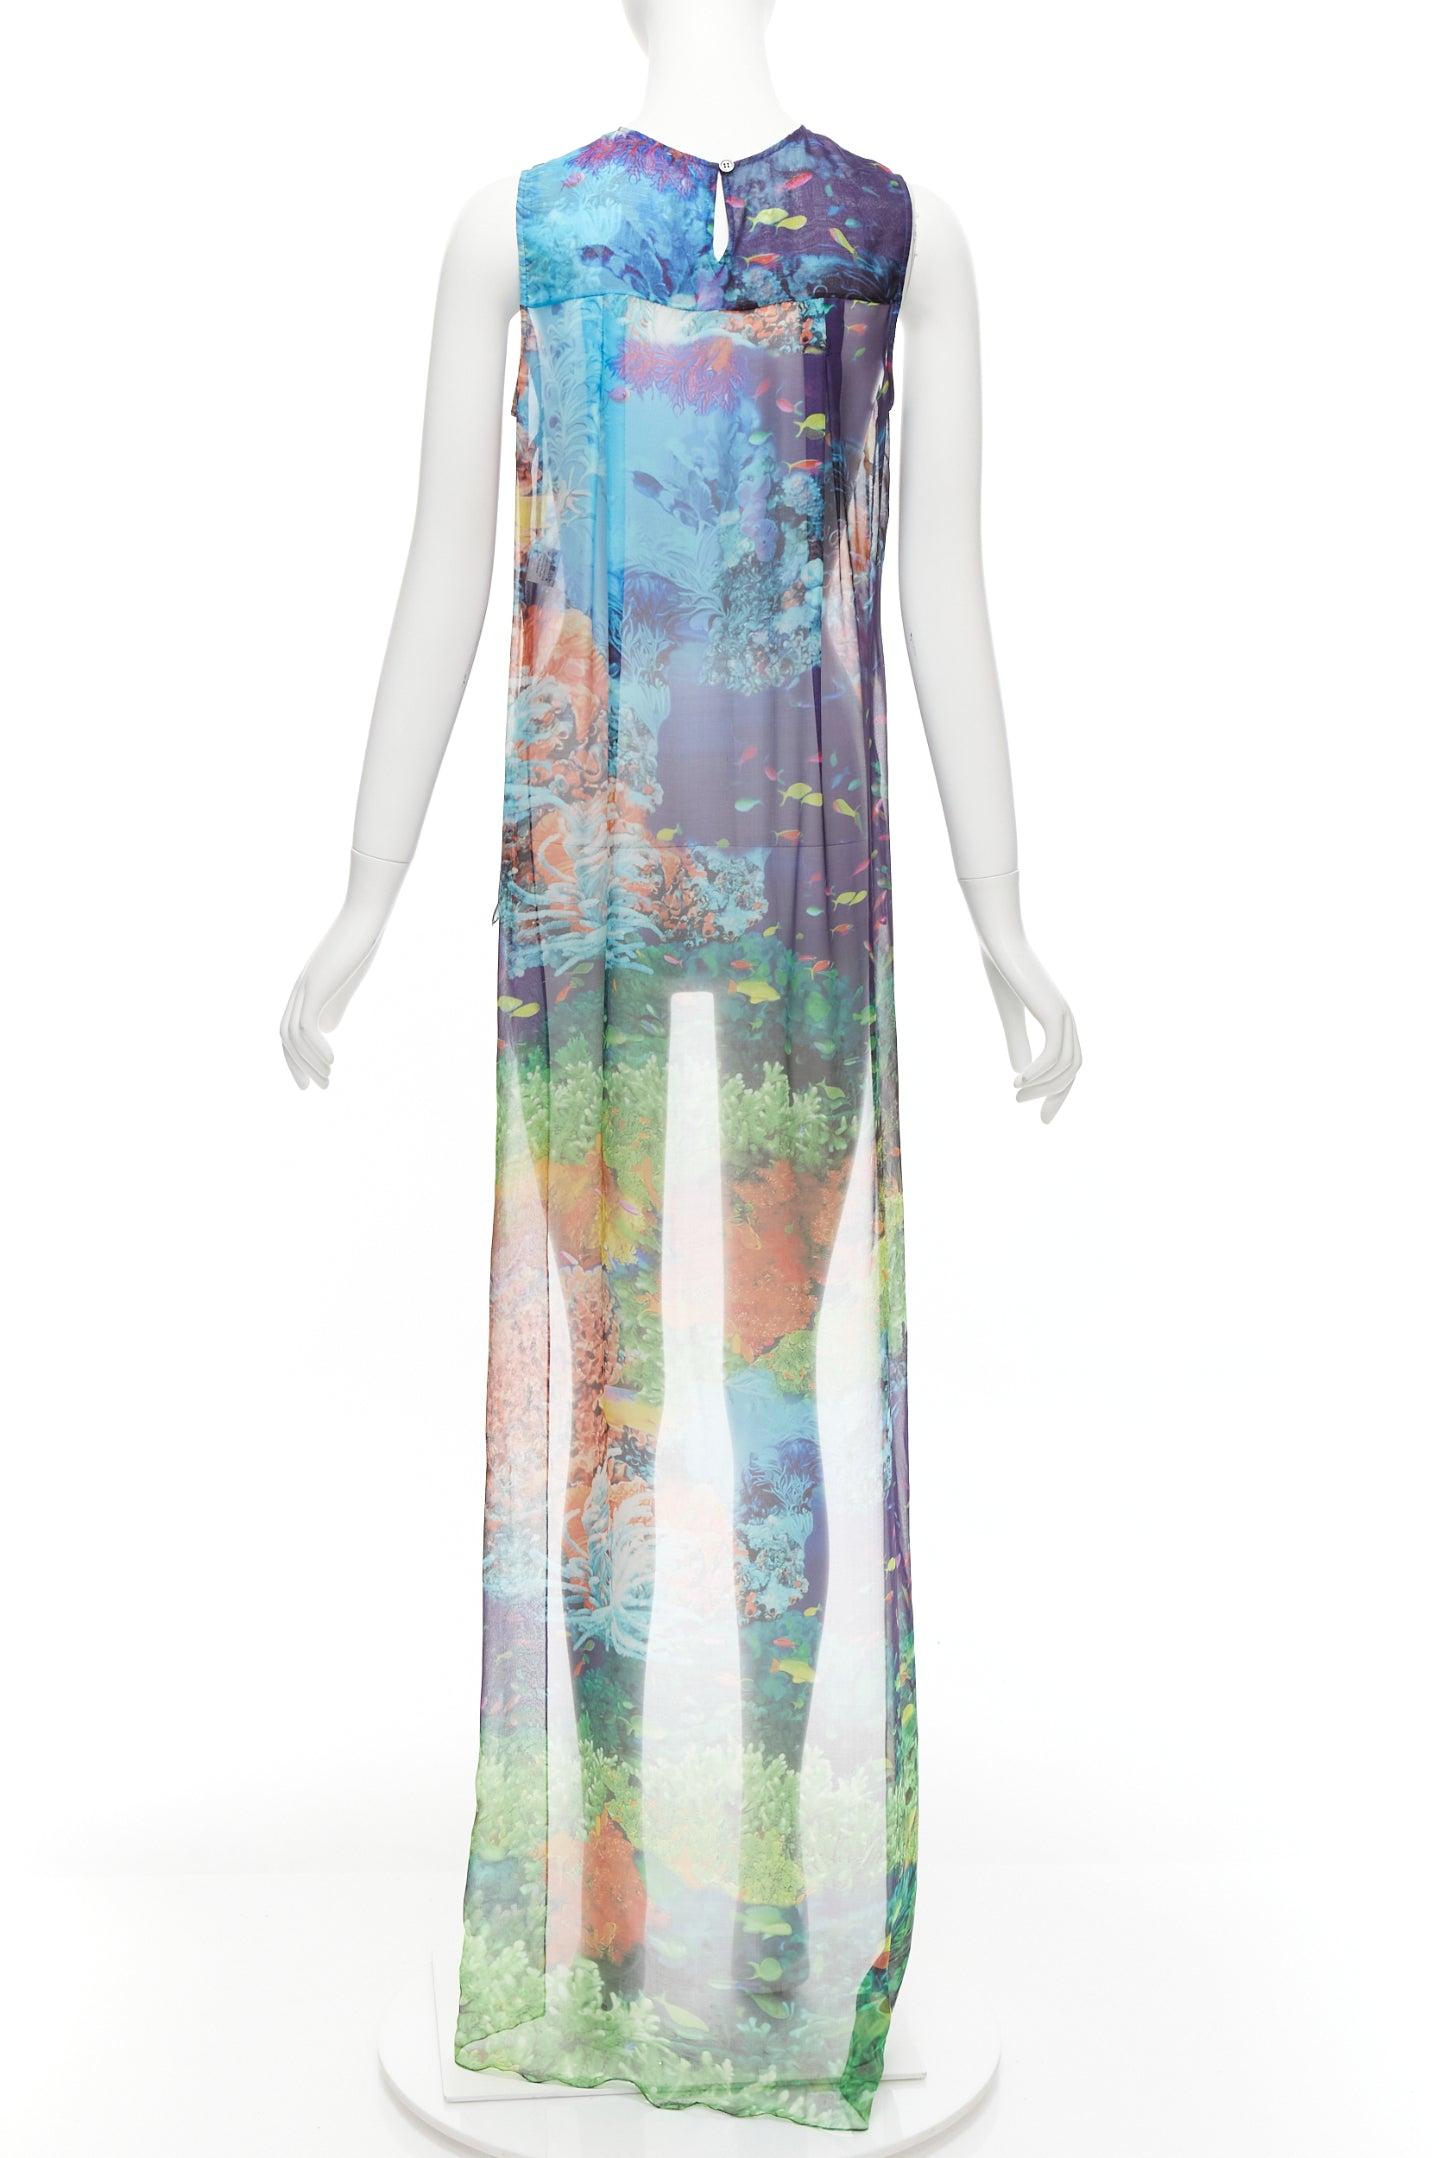 MARY KATRANTZOU 100% silk colourful aquatic print high low sheer top UK8 S For Sale 1